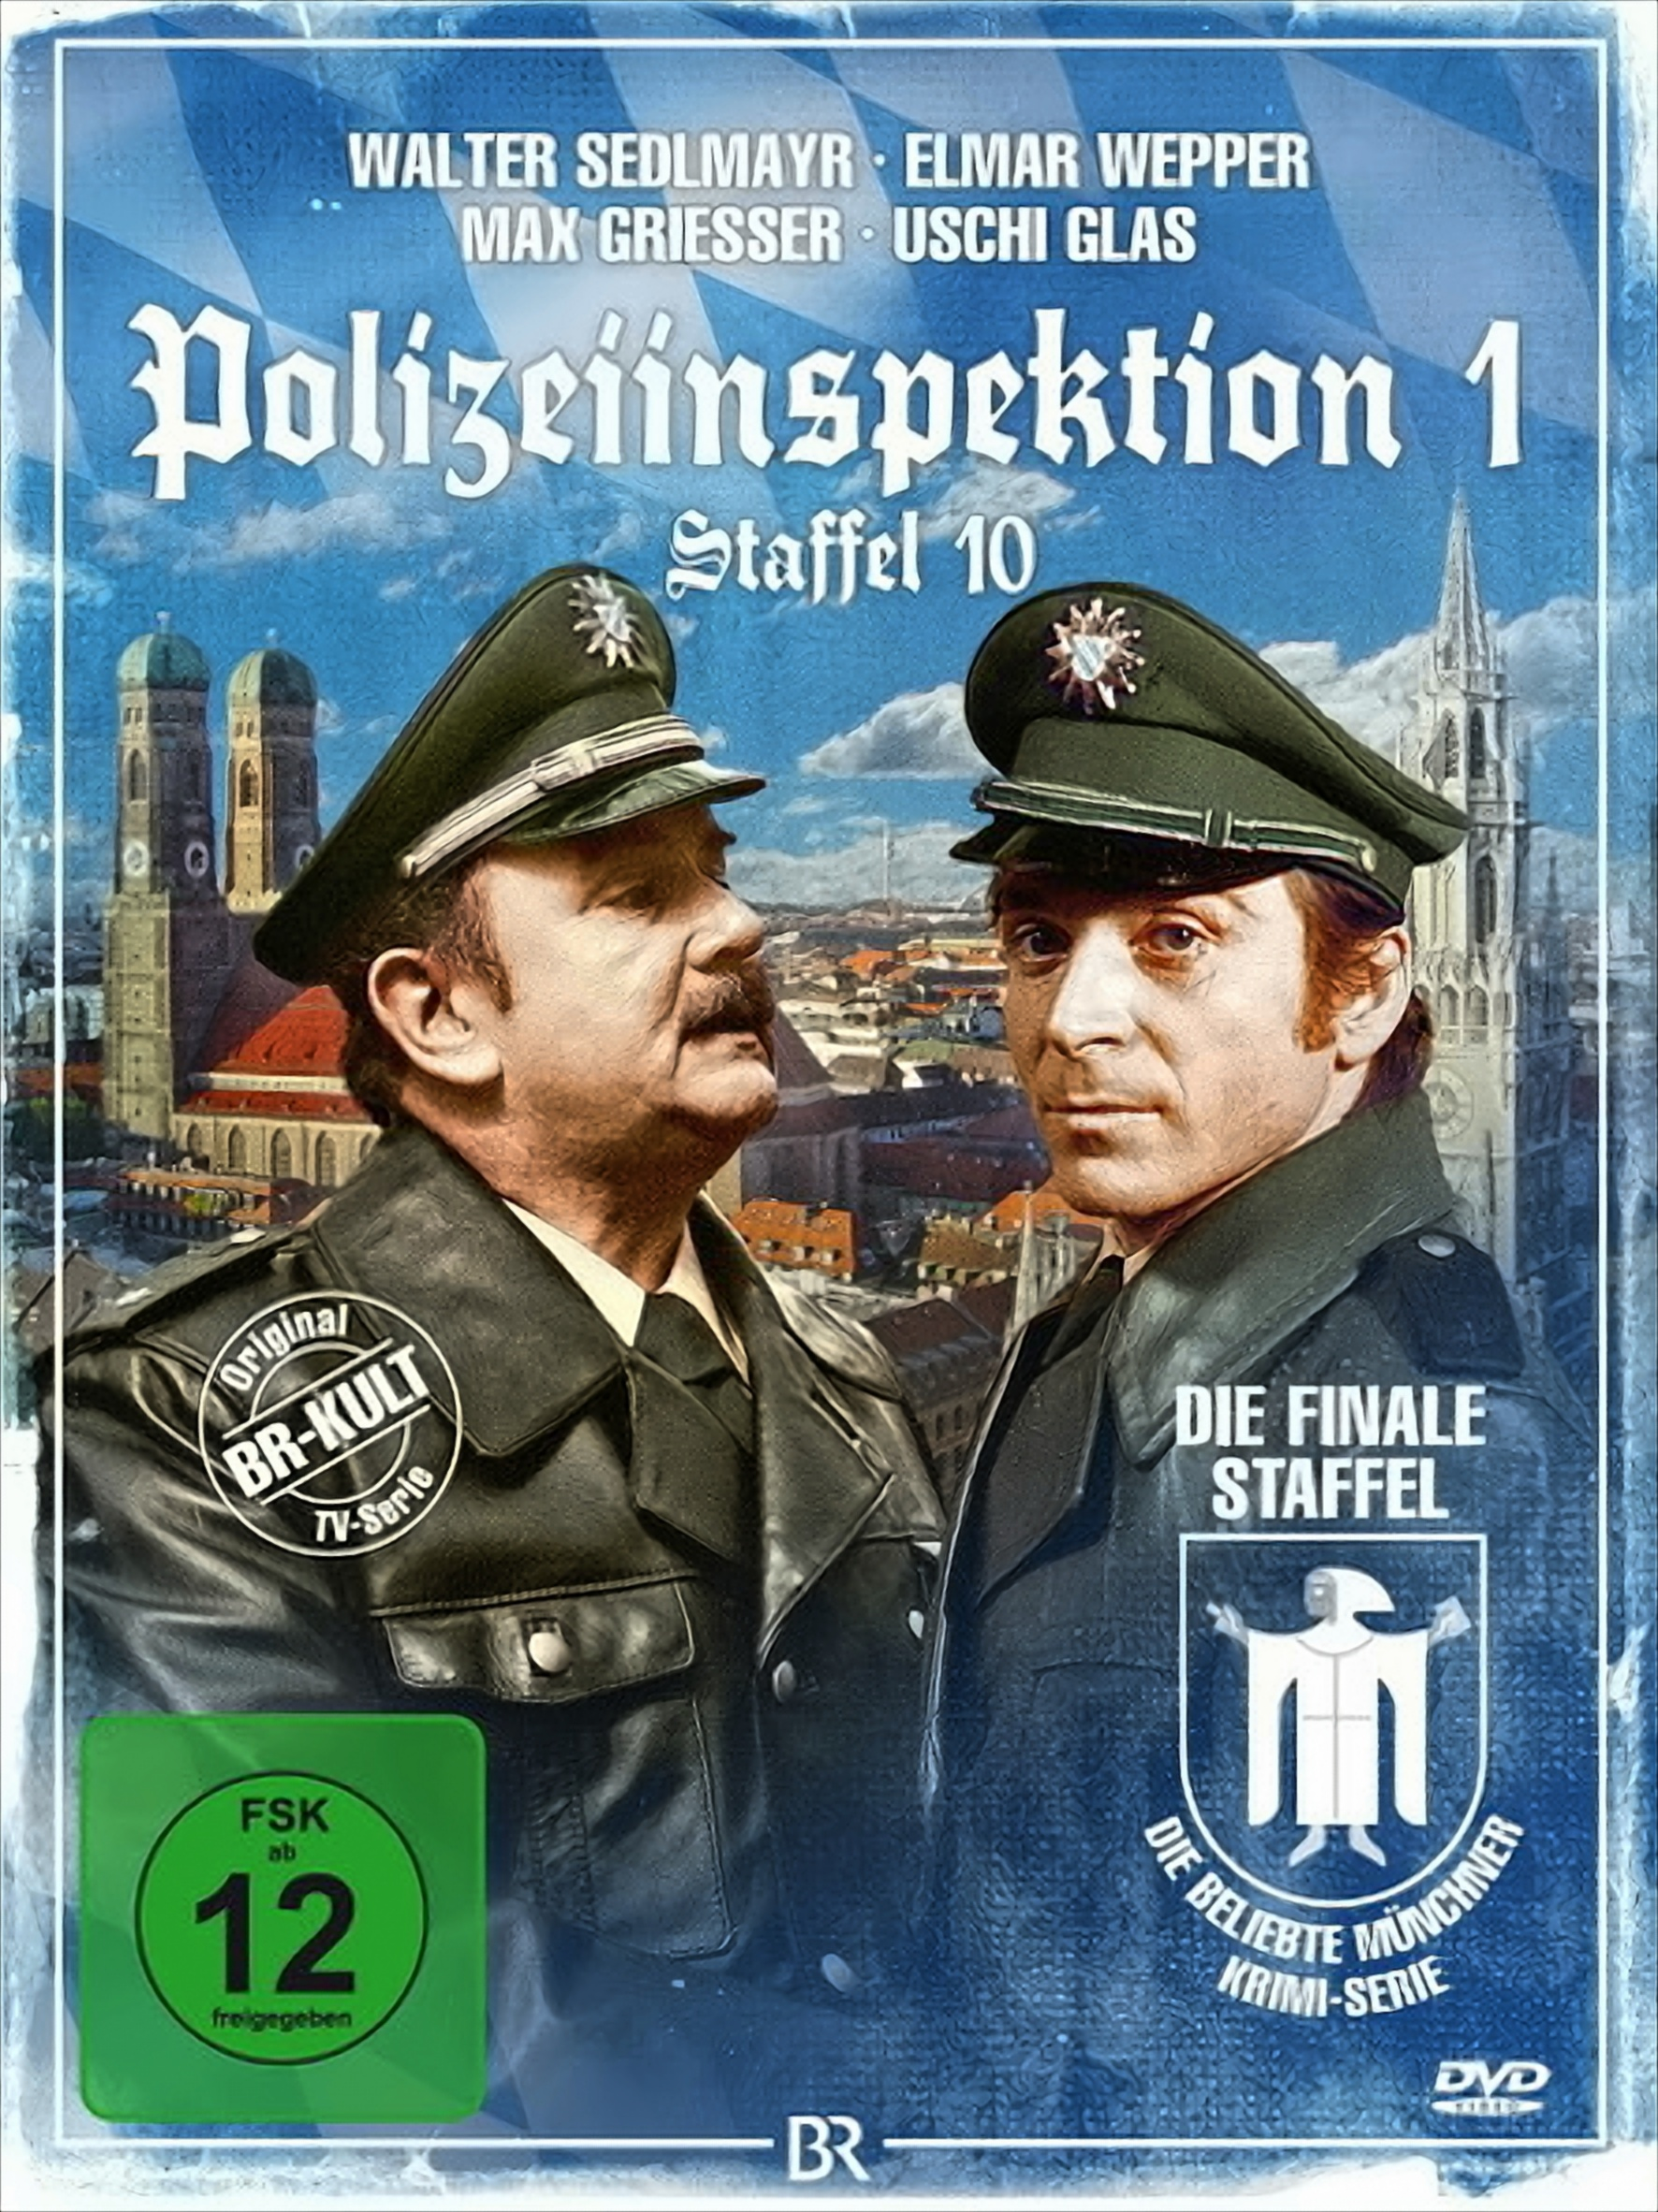 10 - Polizeiinspektion DVD Staffel 1